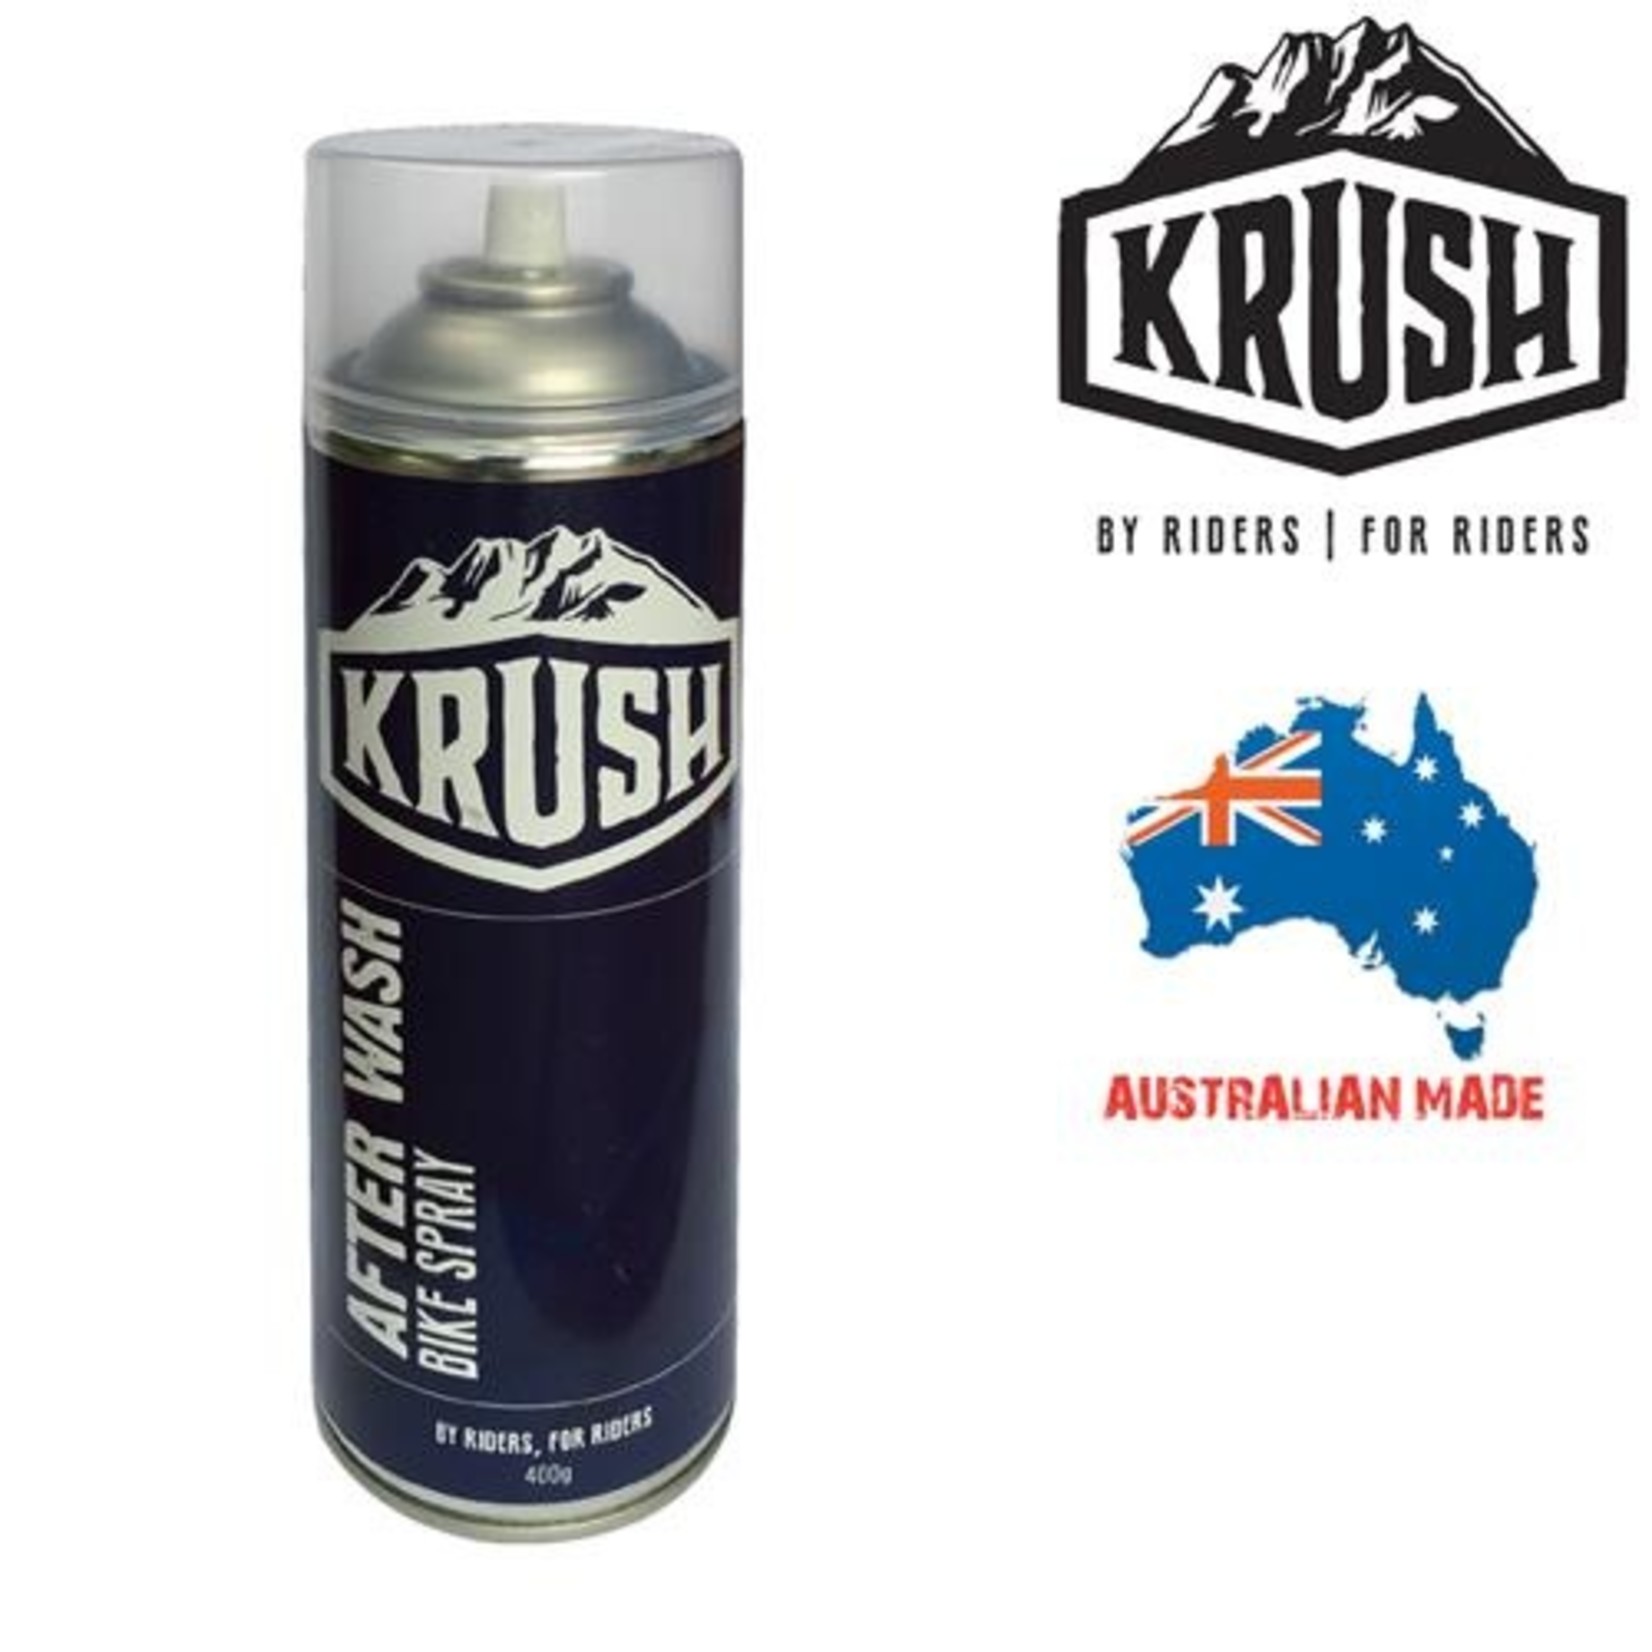 krush Krush After Wash Bike Spray Totally Safe Cleaner Carbon Fiber To Alloy - 400g